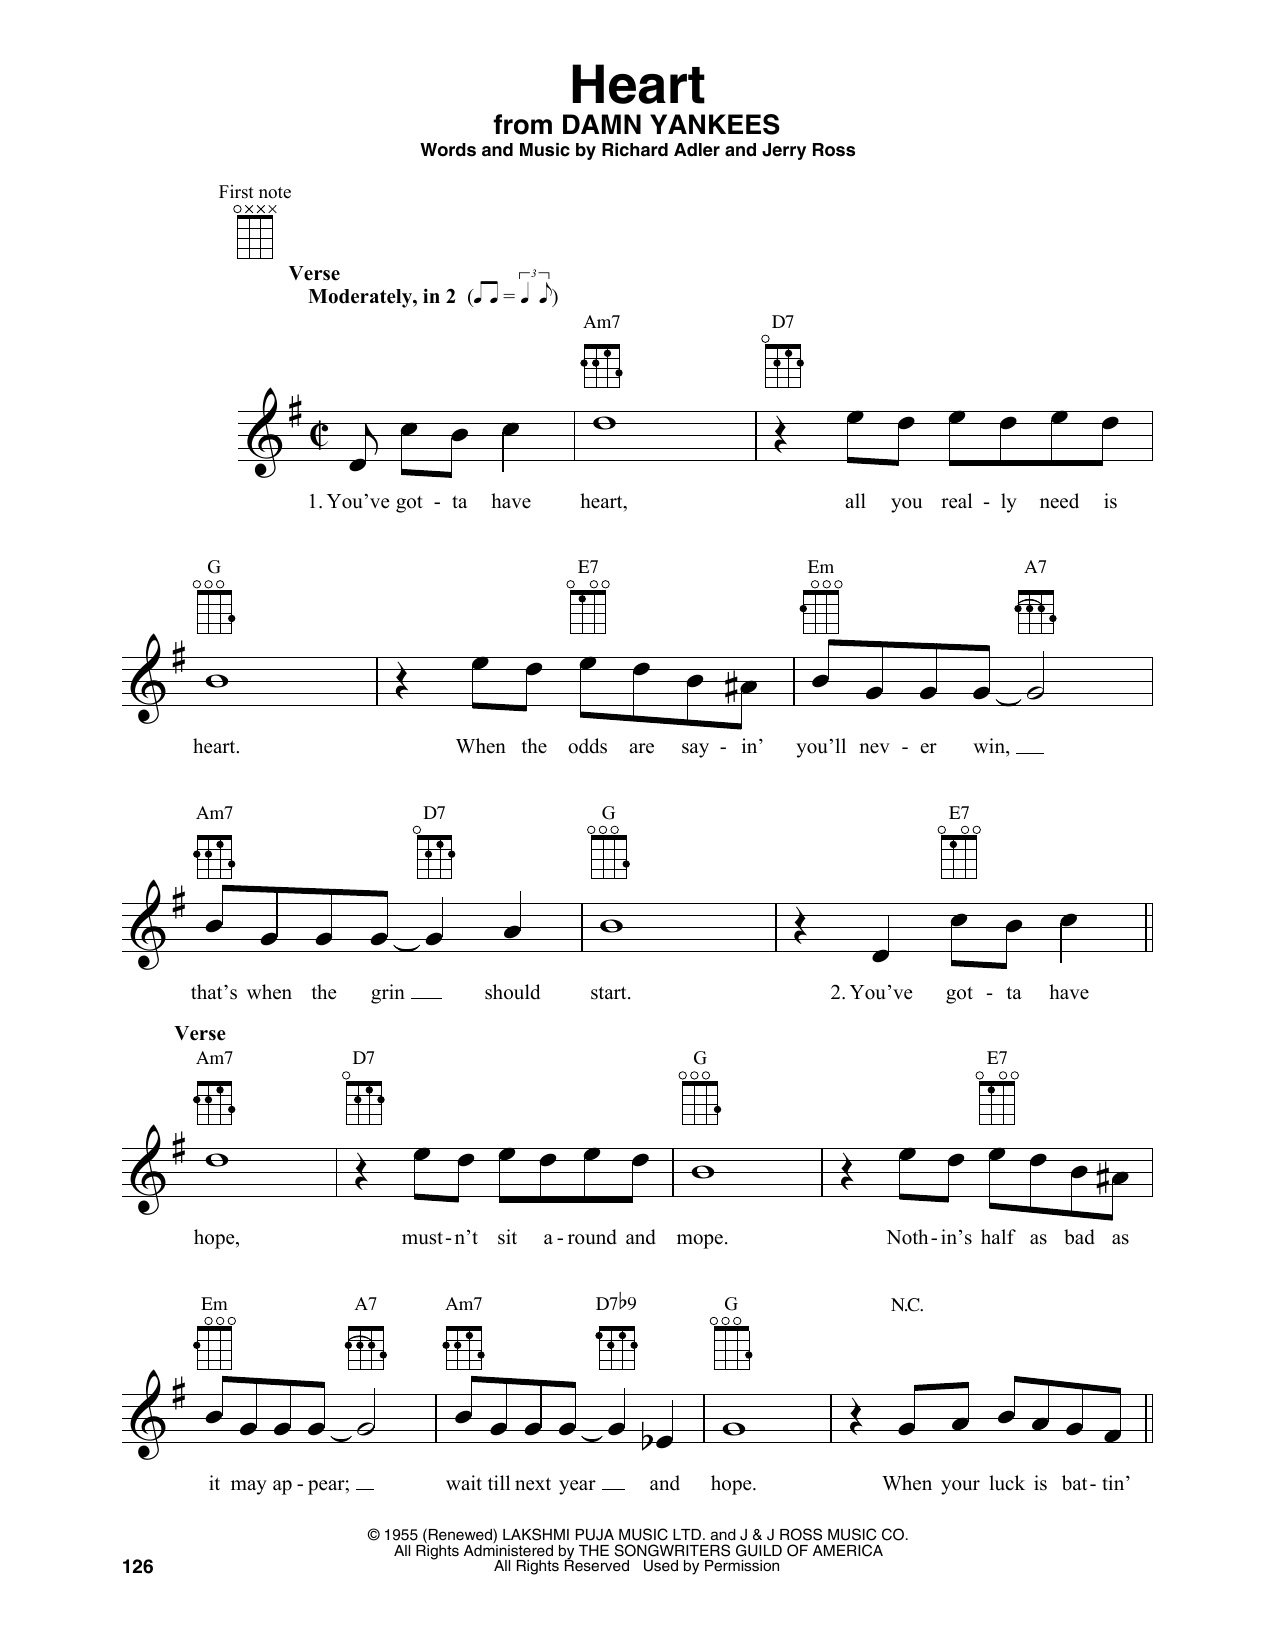 Adler & Ross Heart (from Damn Yankees) sheet music notes and chords arranged for Baritone Ukulele